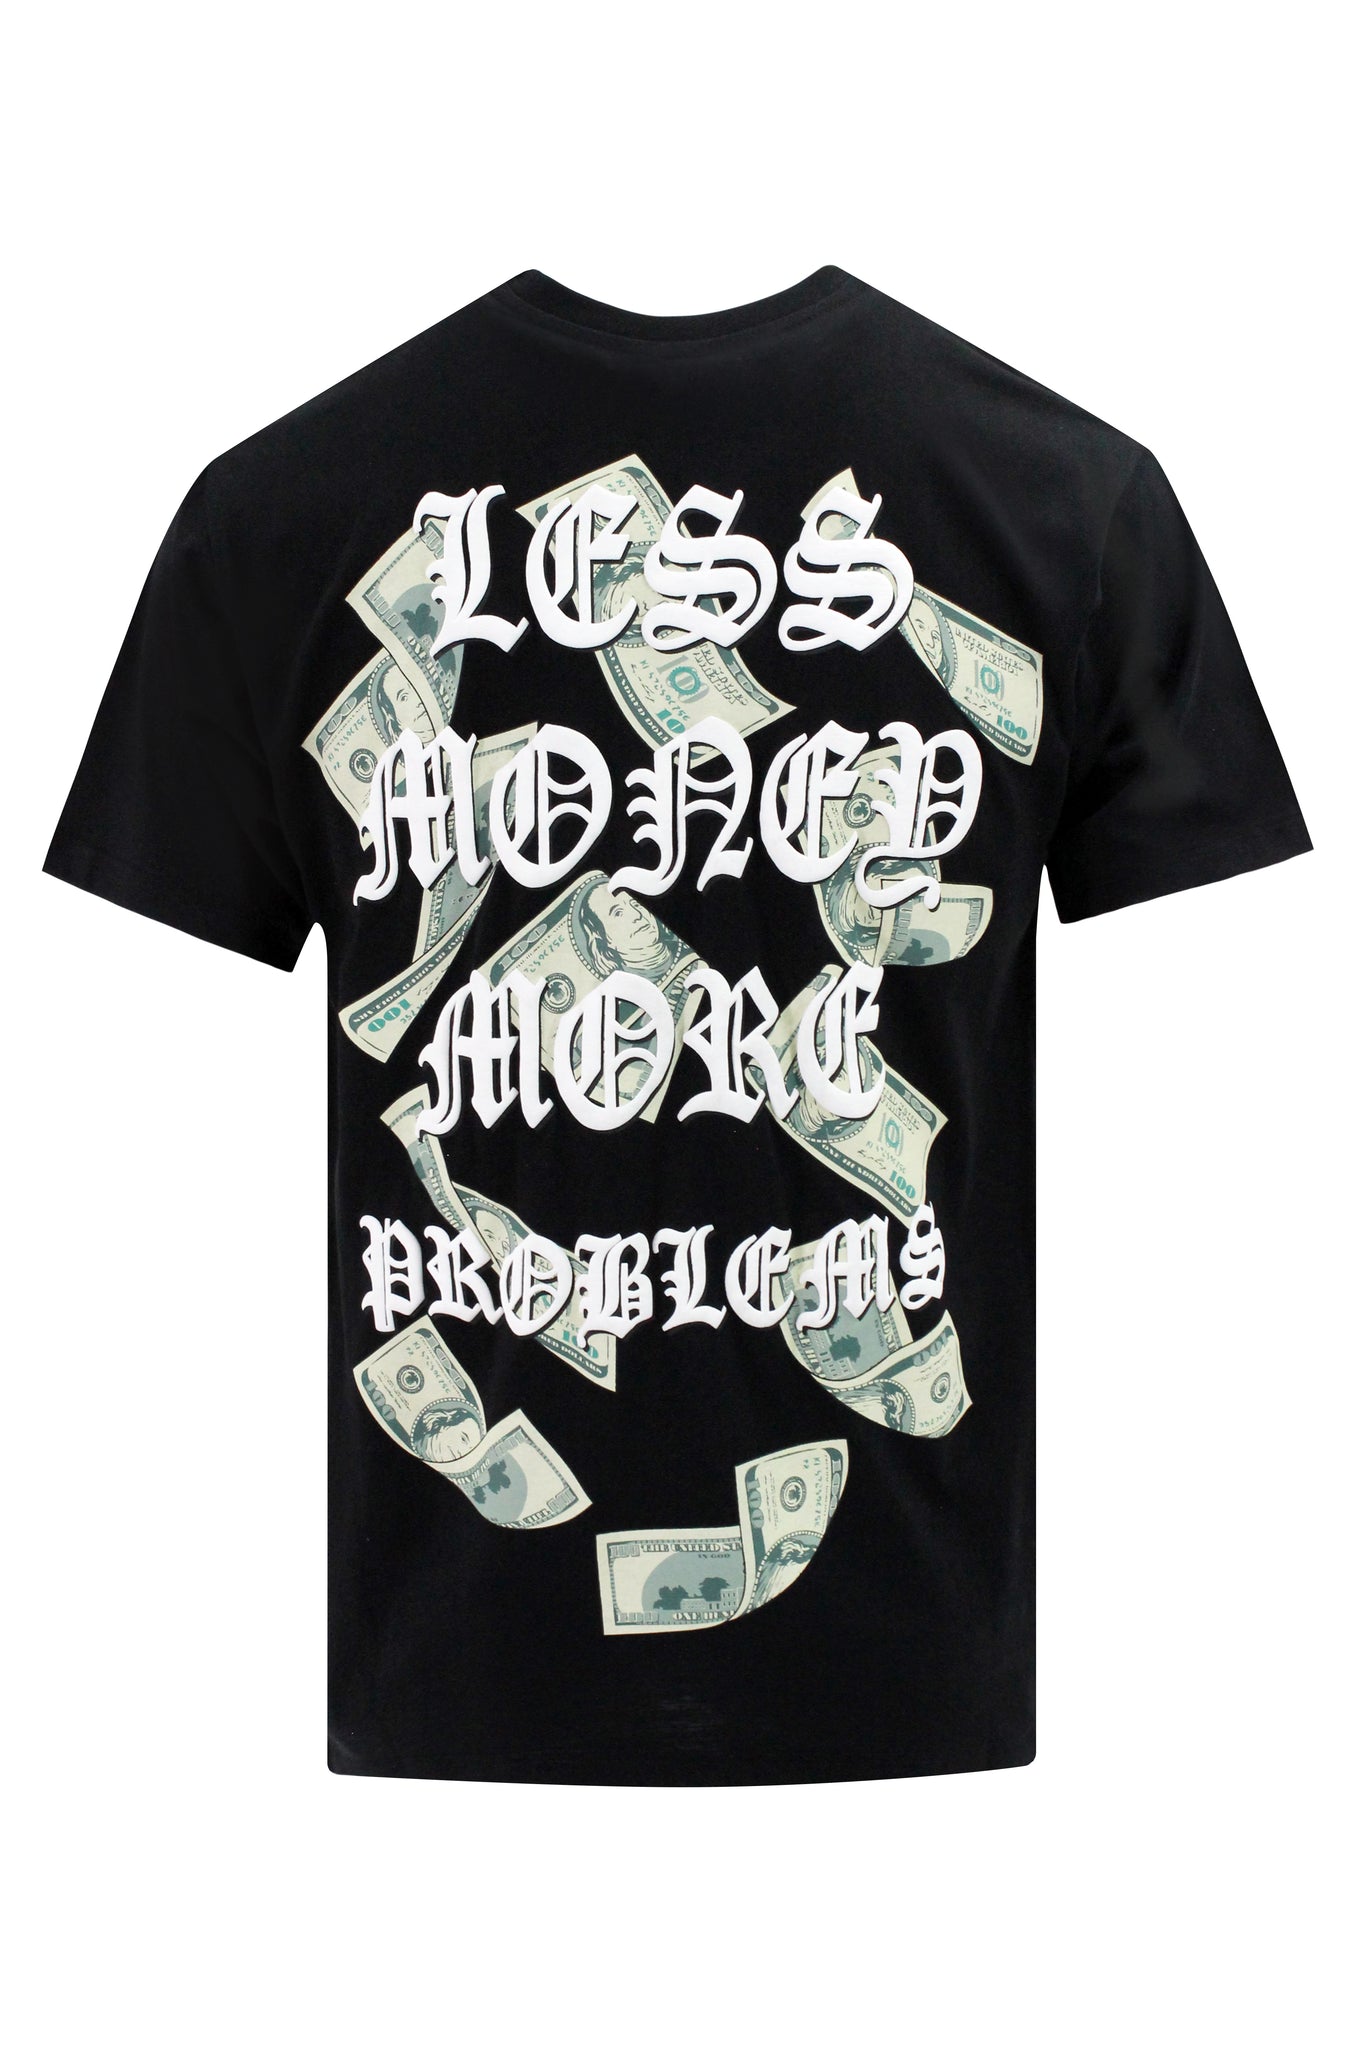 Money Problems T-shirt